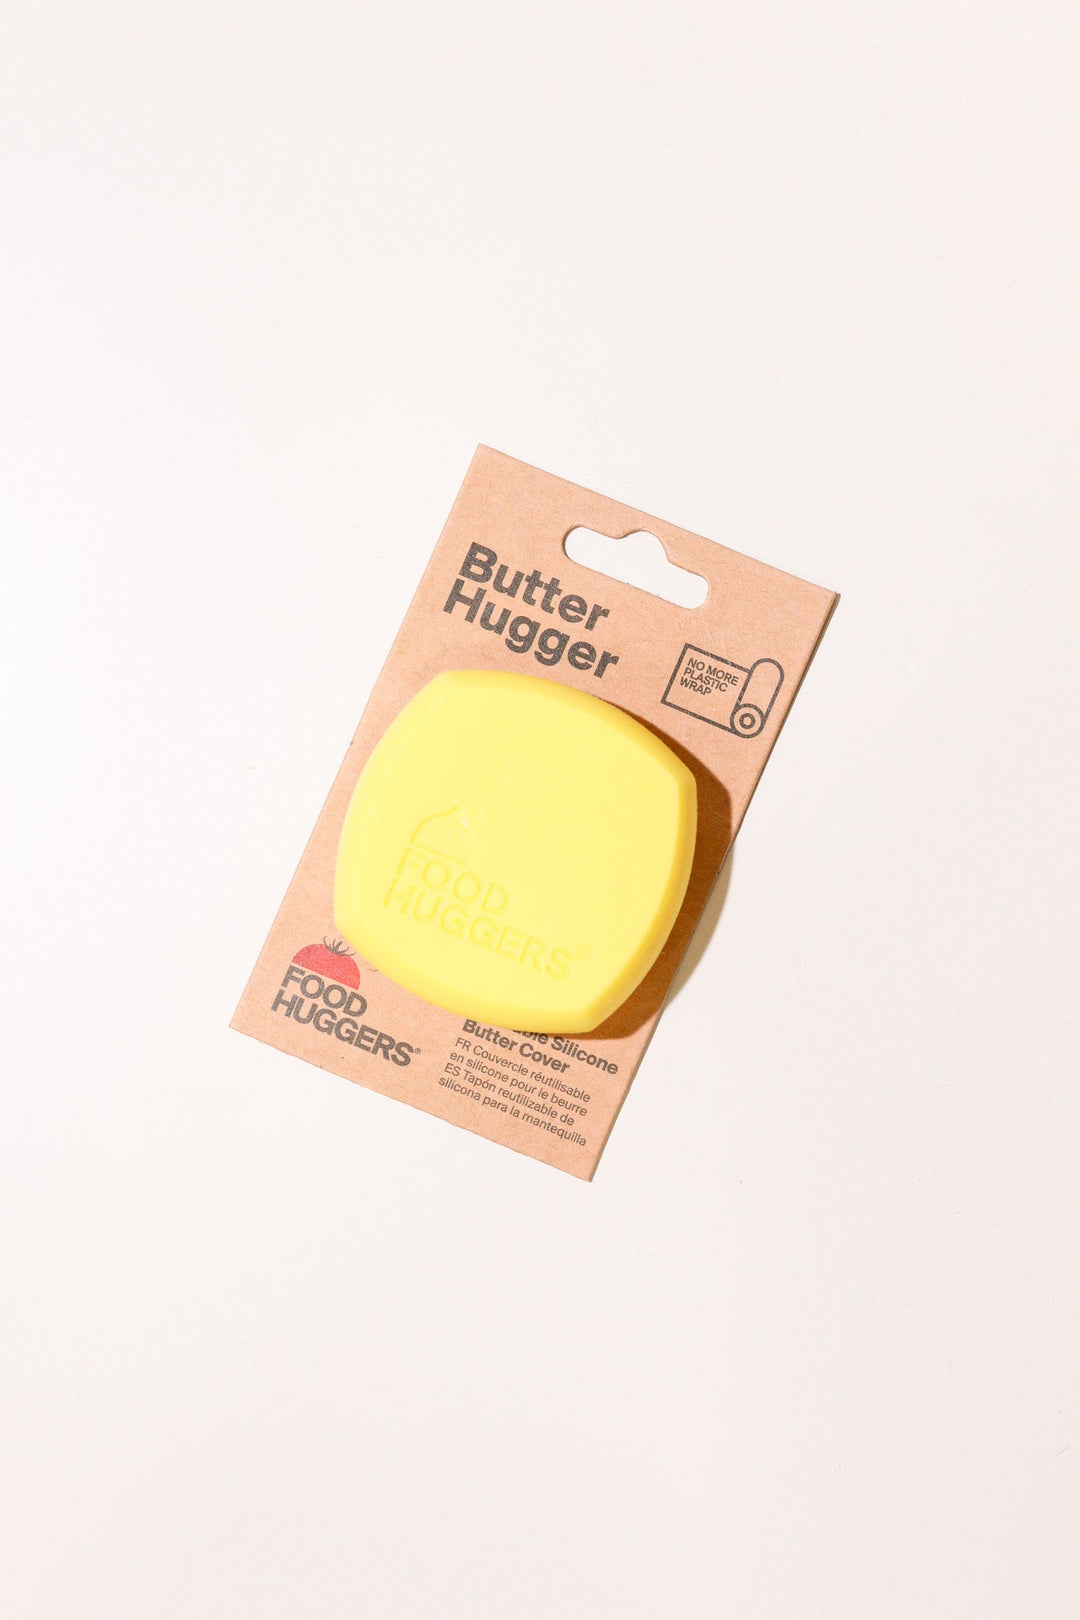 Butter Hugger - Heyday